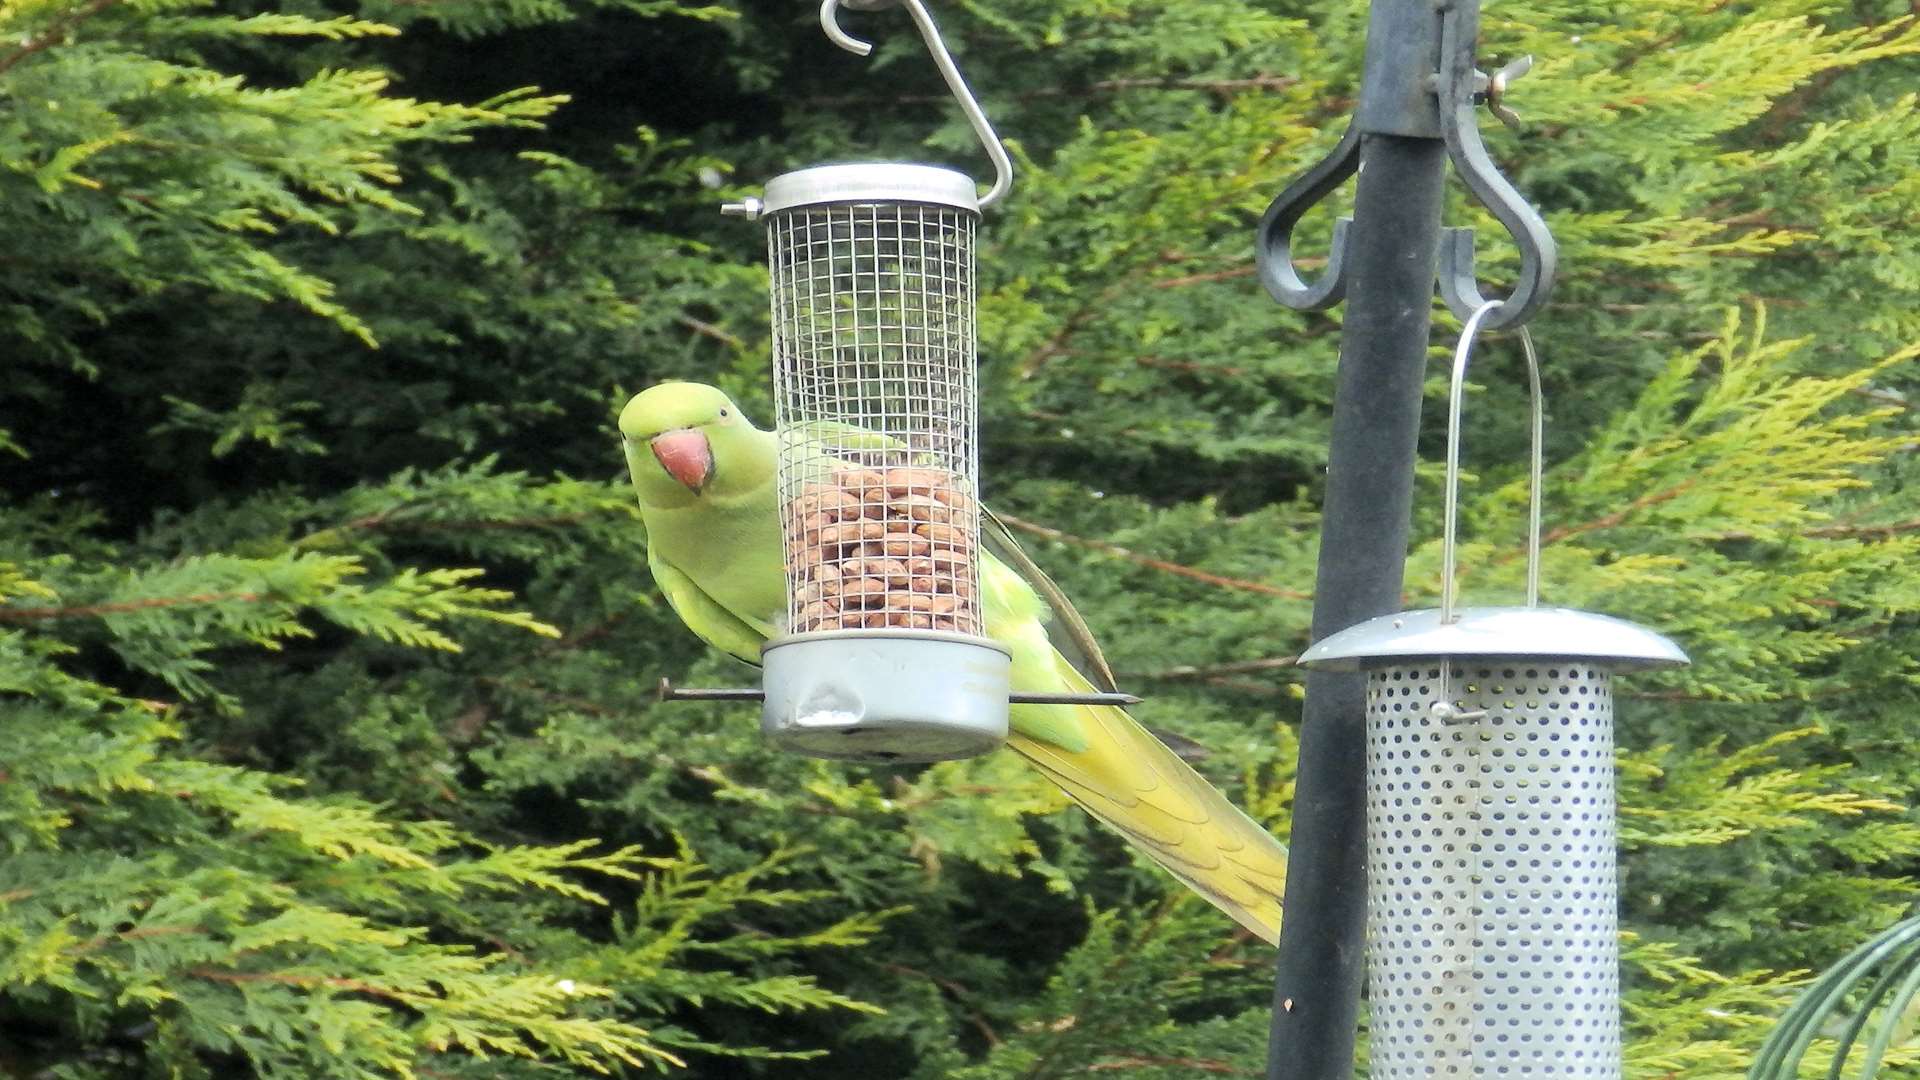 This wild parakeet landed on Martin Hawkins' bird-feeder